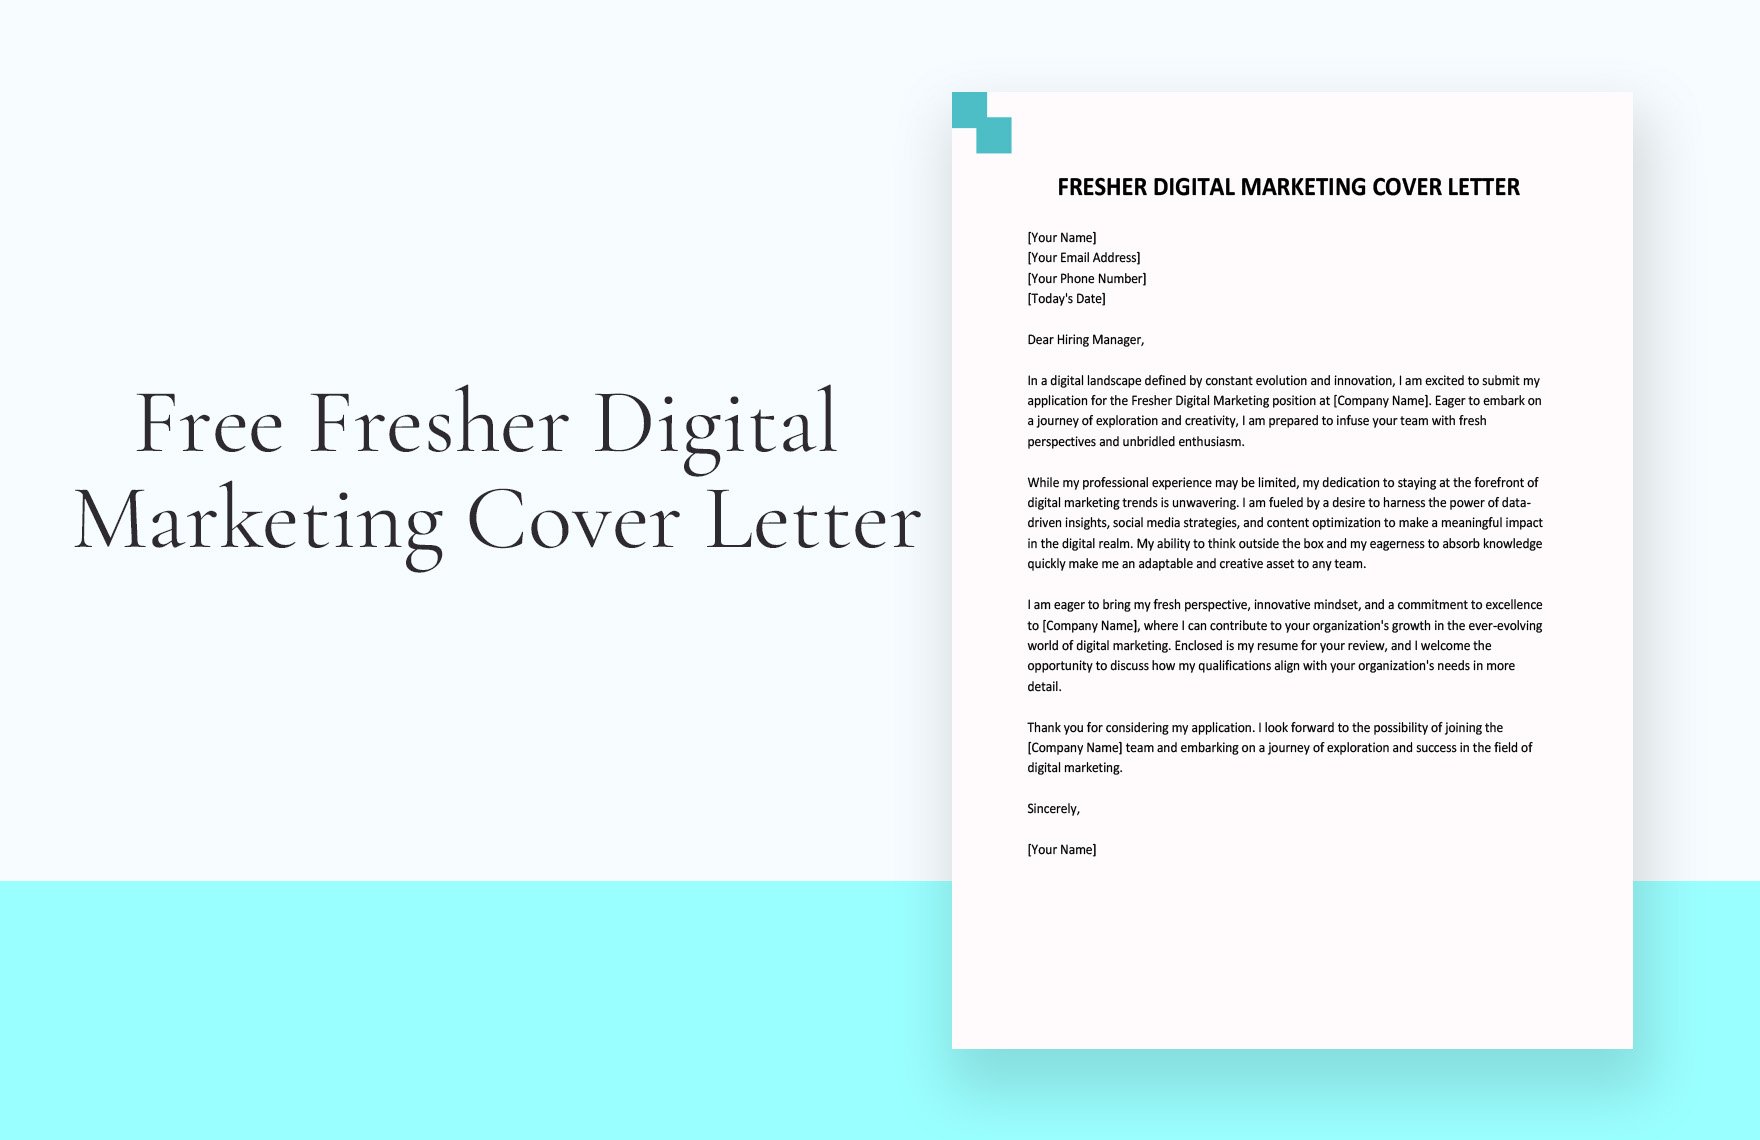 Fresher Digital Marketing Cover Letter in Word, Google Docs